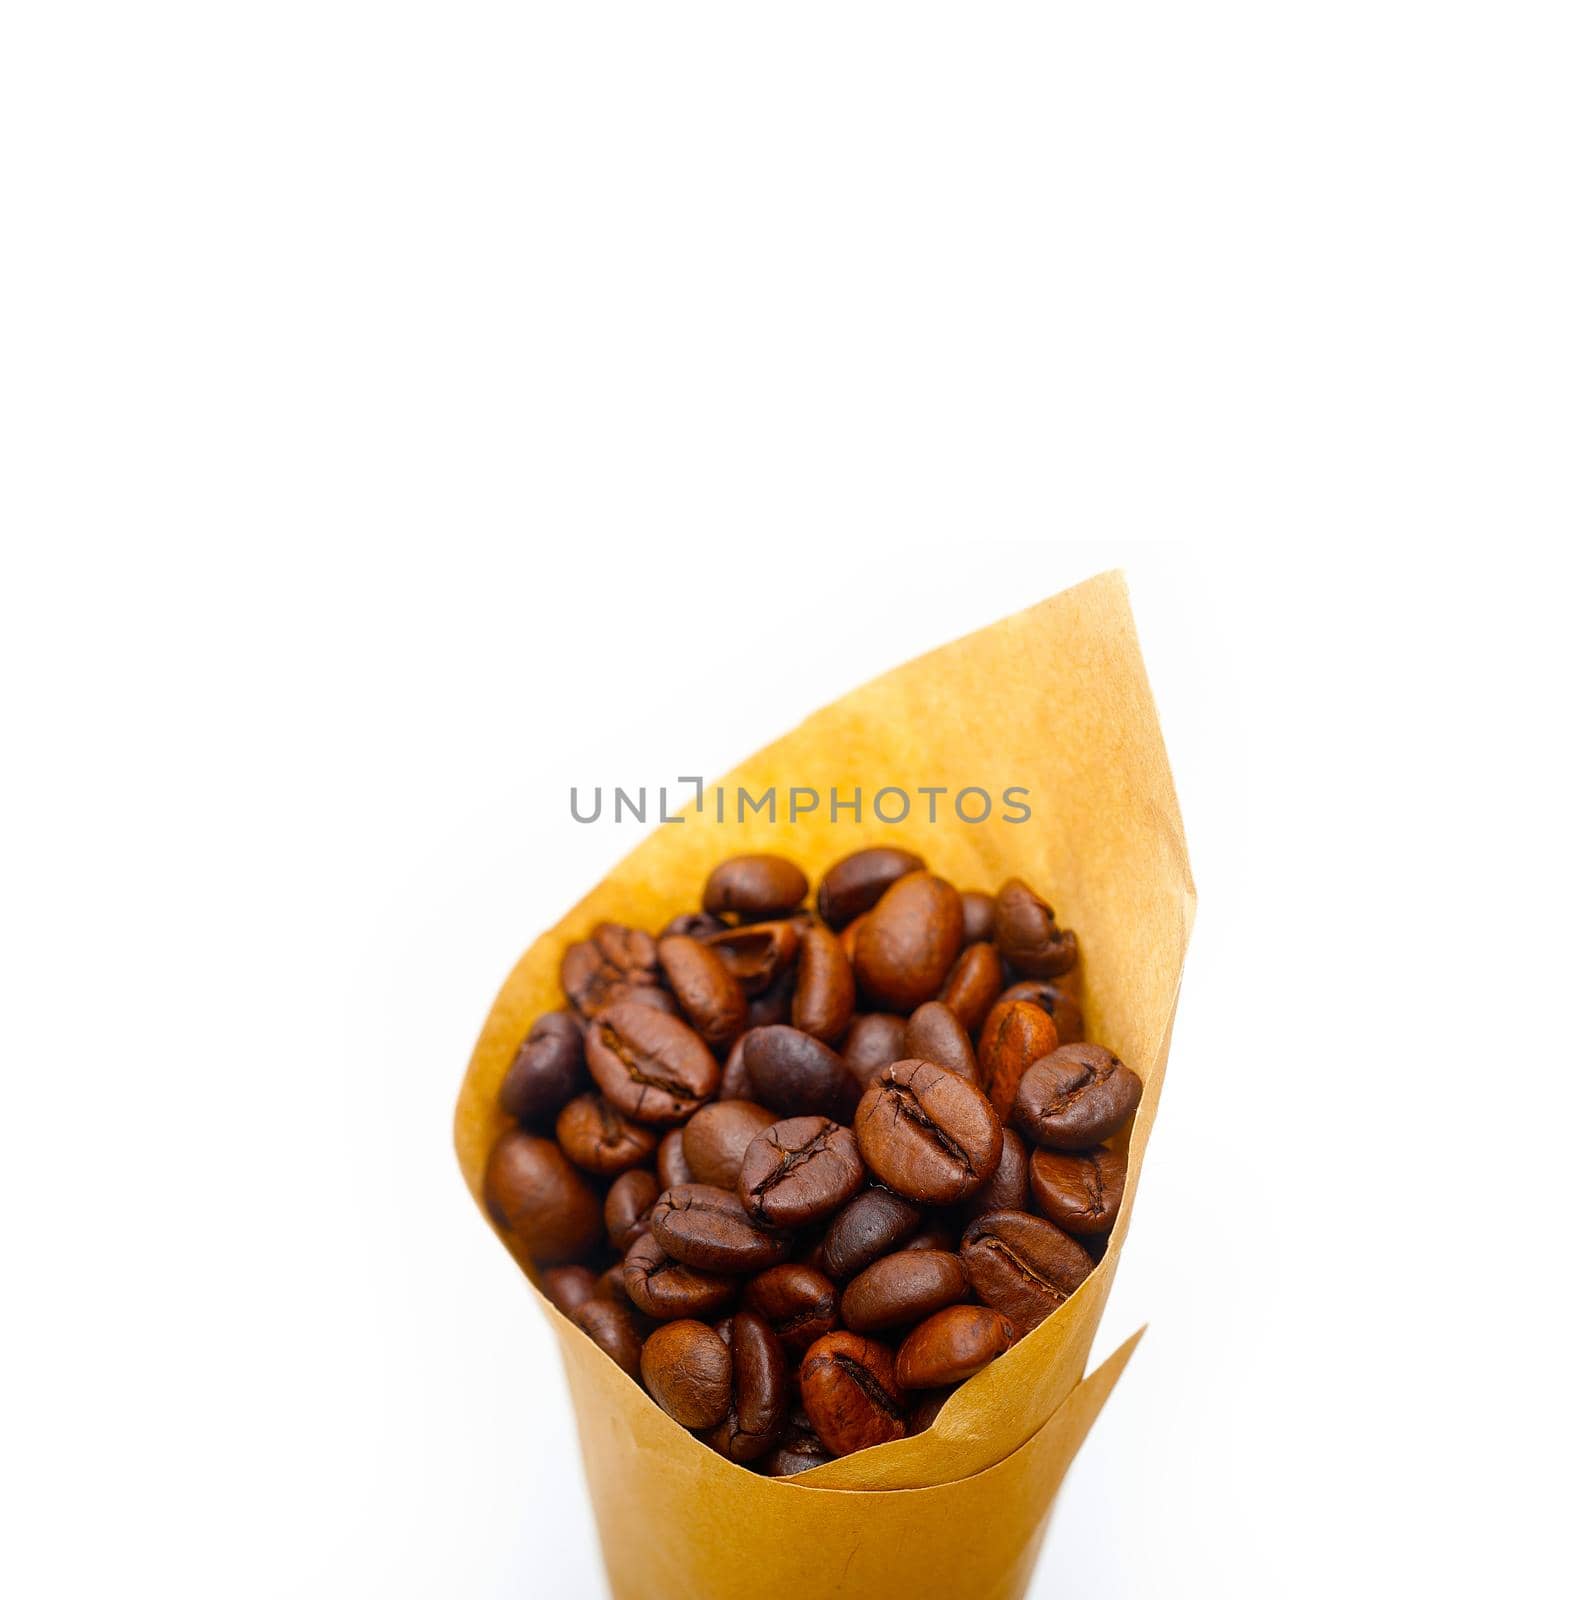 espresso coffee beans on a paper cone by keko64